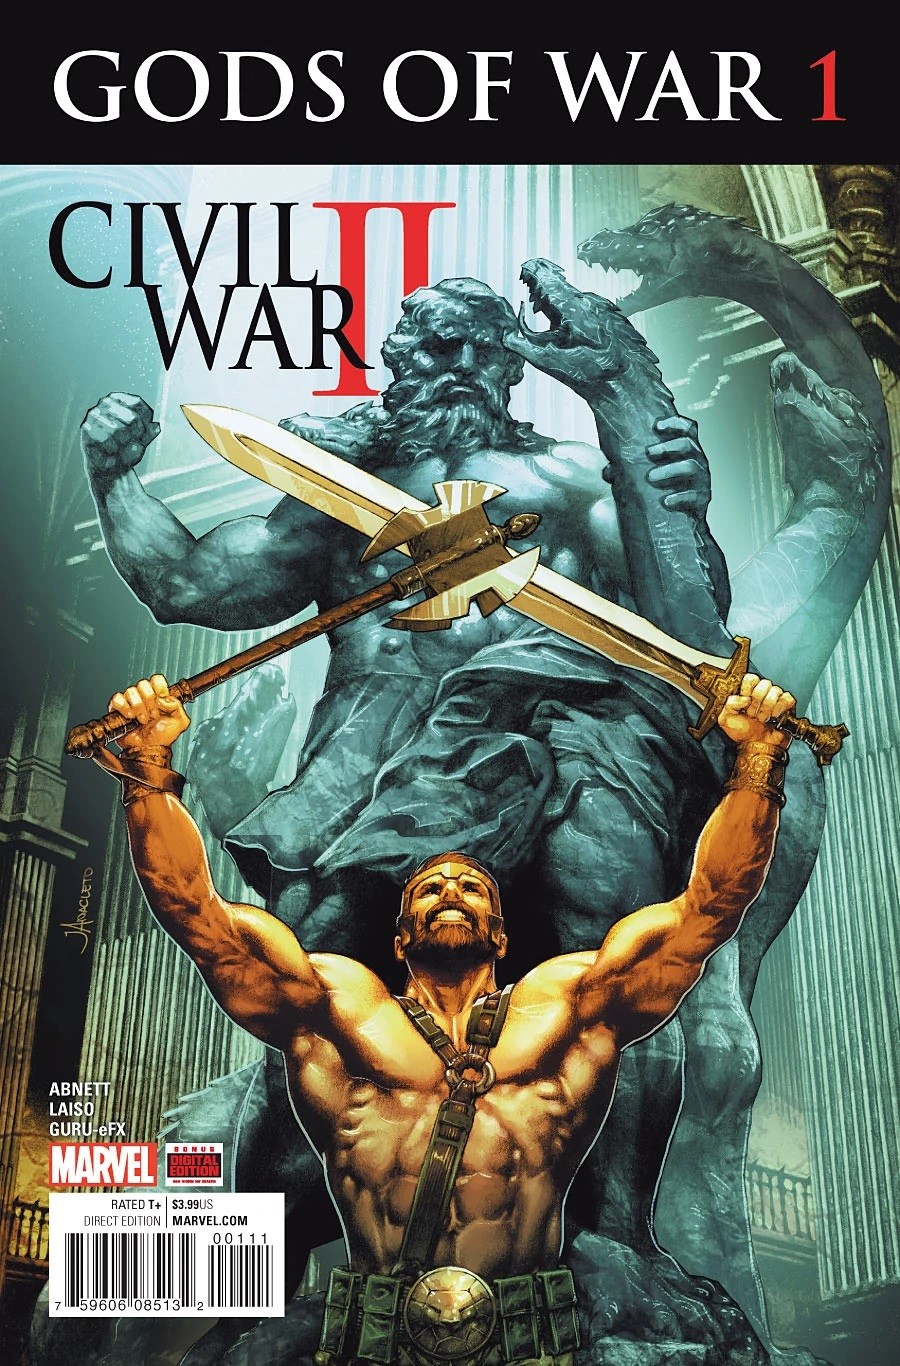 Civil War Ii: Gods of War Limited Series Bundle Issues 1-3